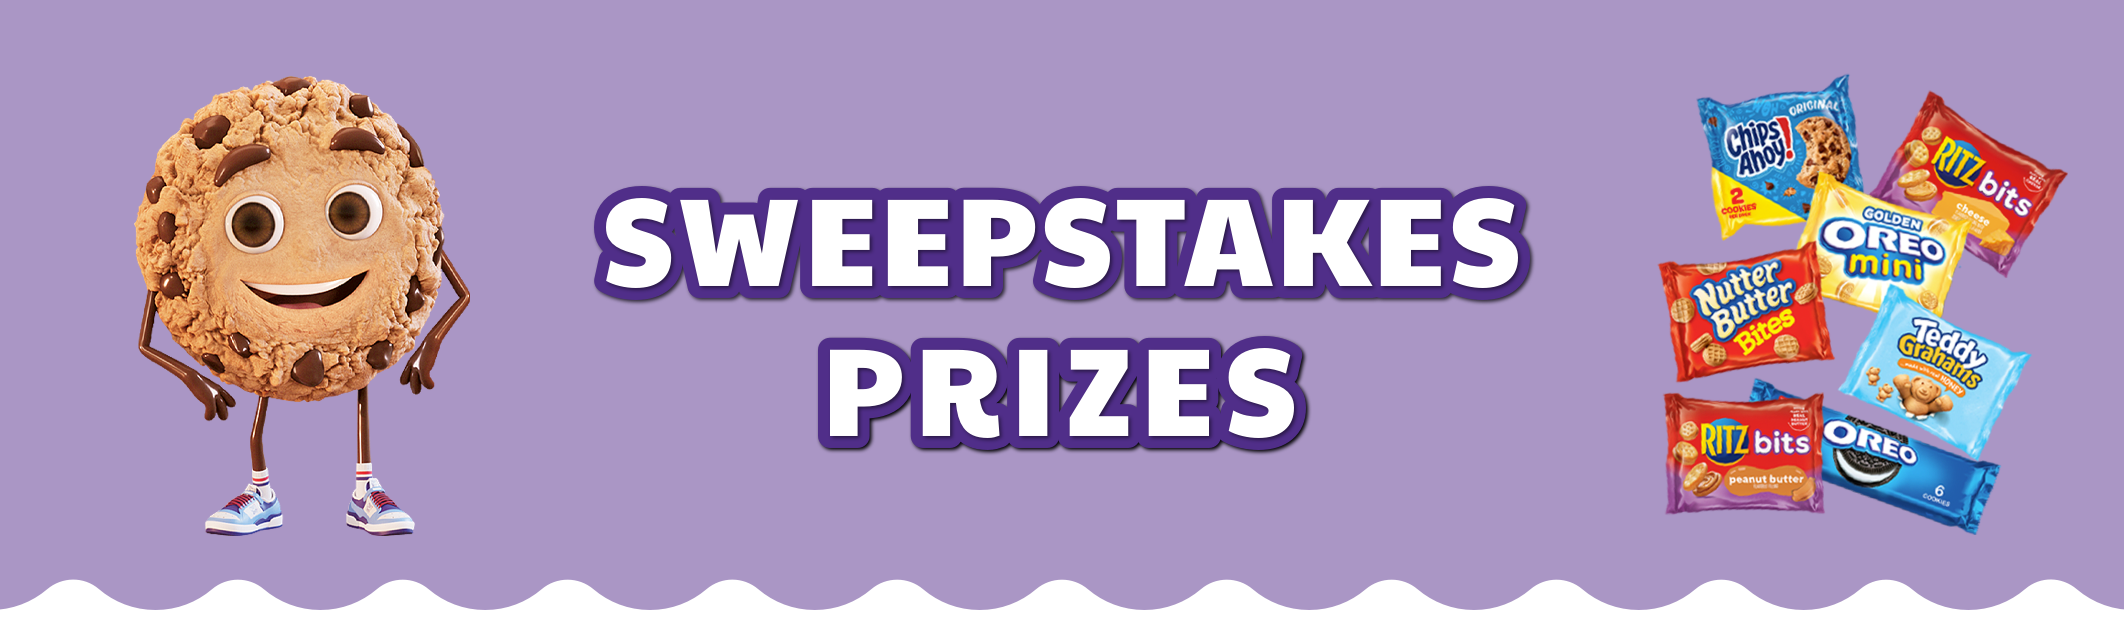 Snackworks Sweepstakes - Prizes